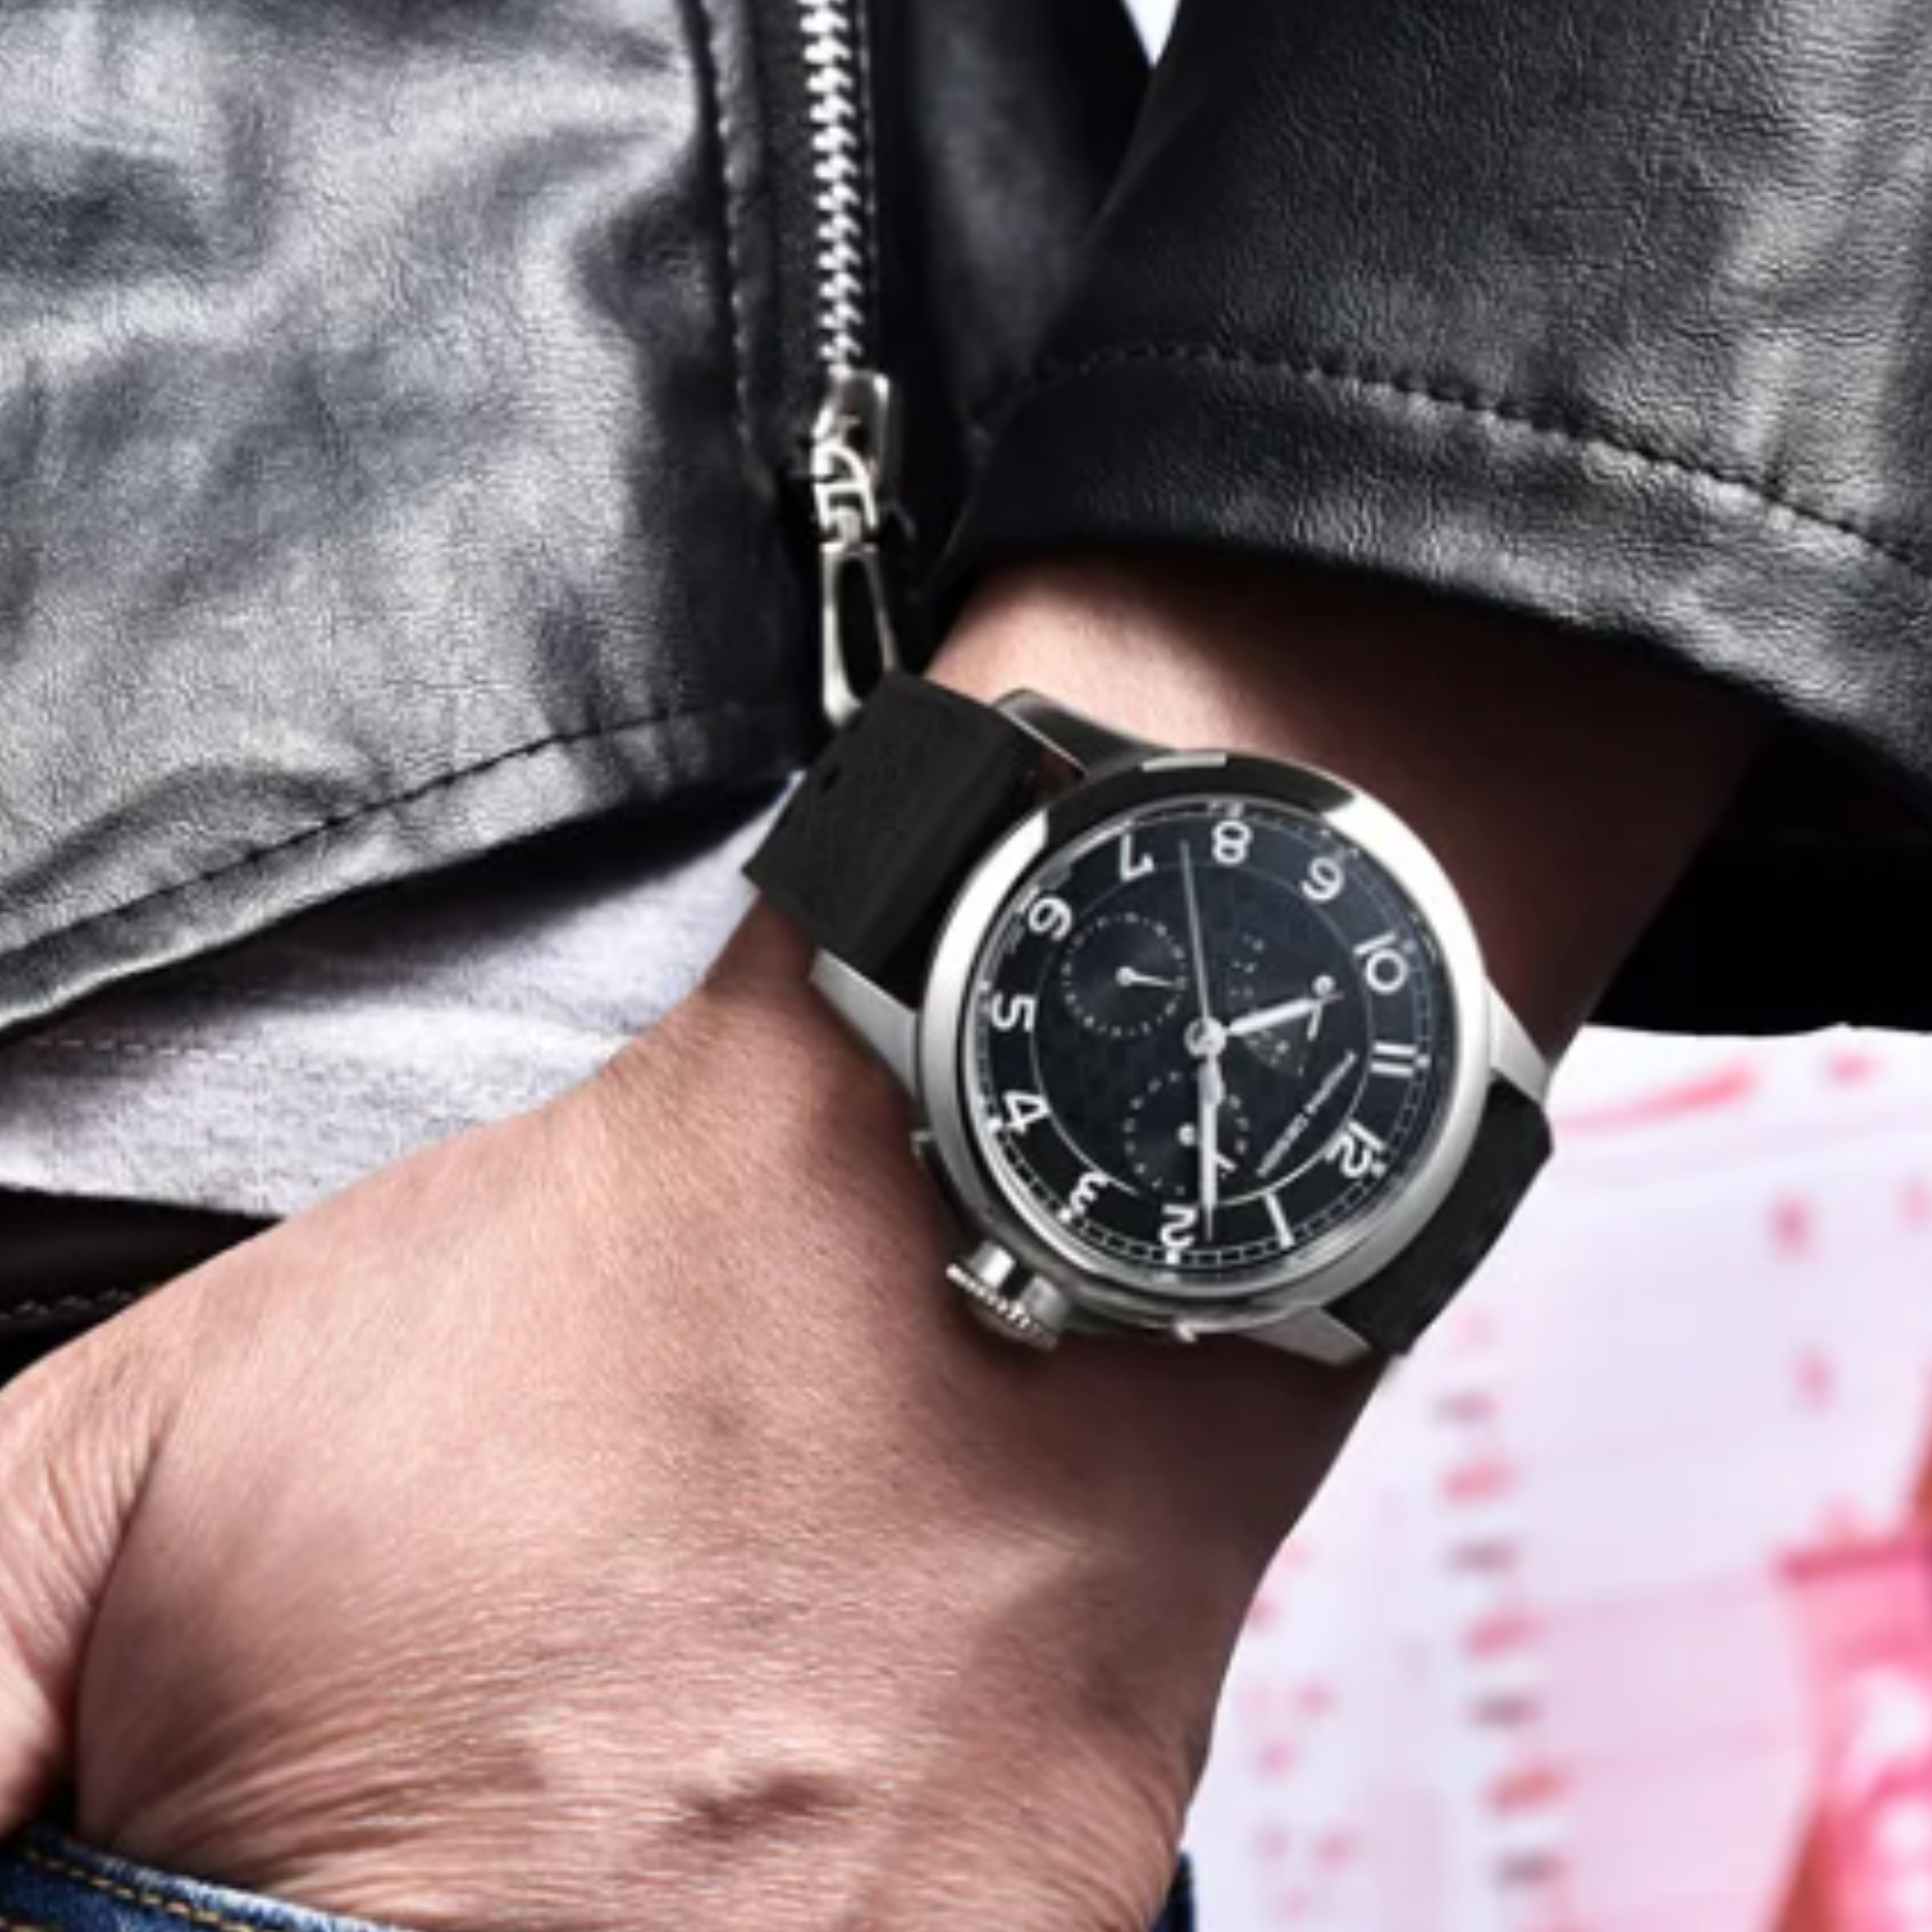 Pagani Design PD-1780 Japanese Quartz Movement Wristwatch with Sapphire Crystal Calendar New 24 Hours 100M Waterproof Watch - Black Dial